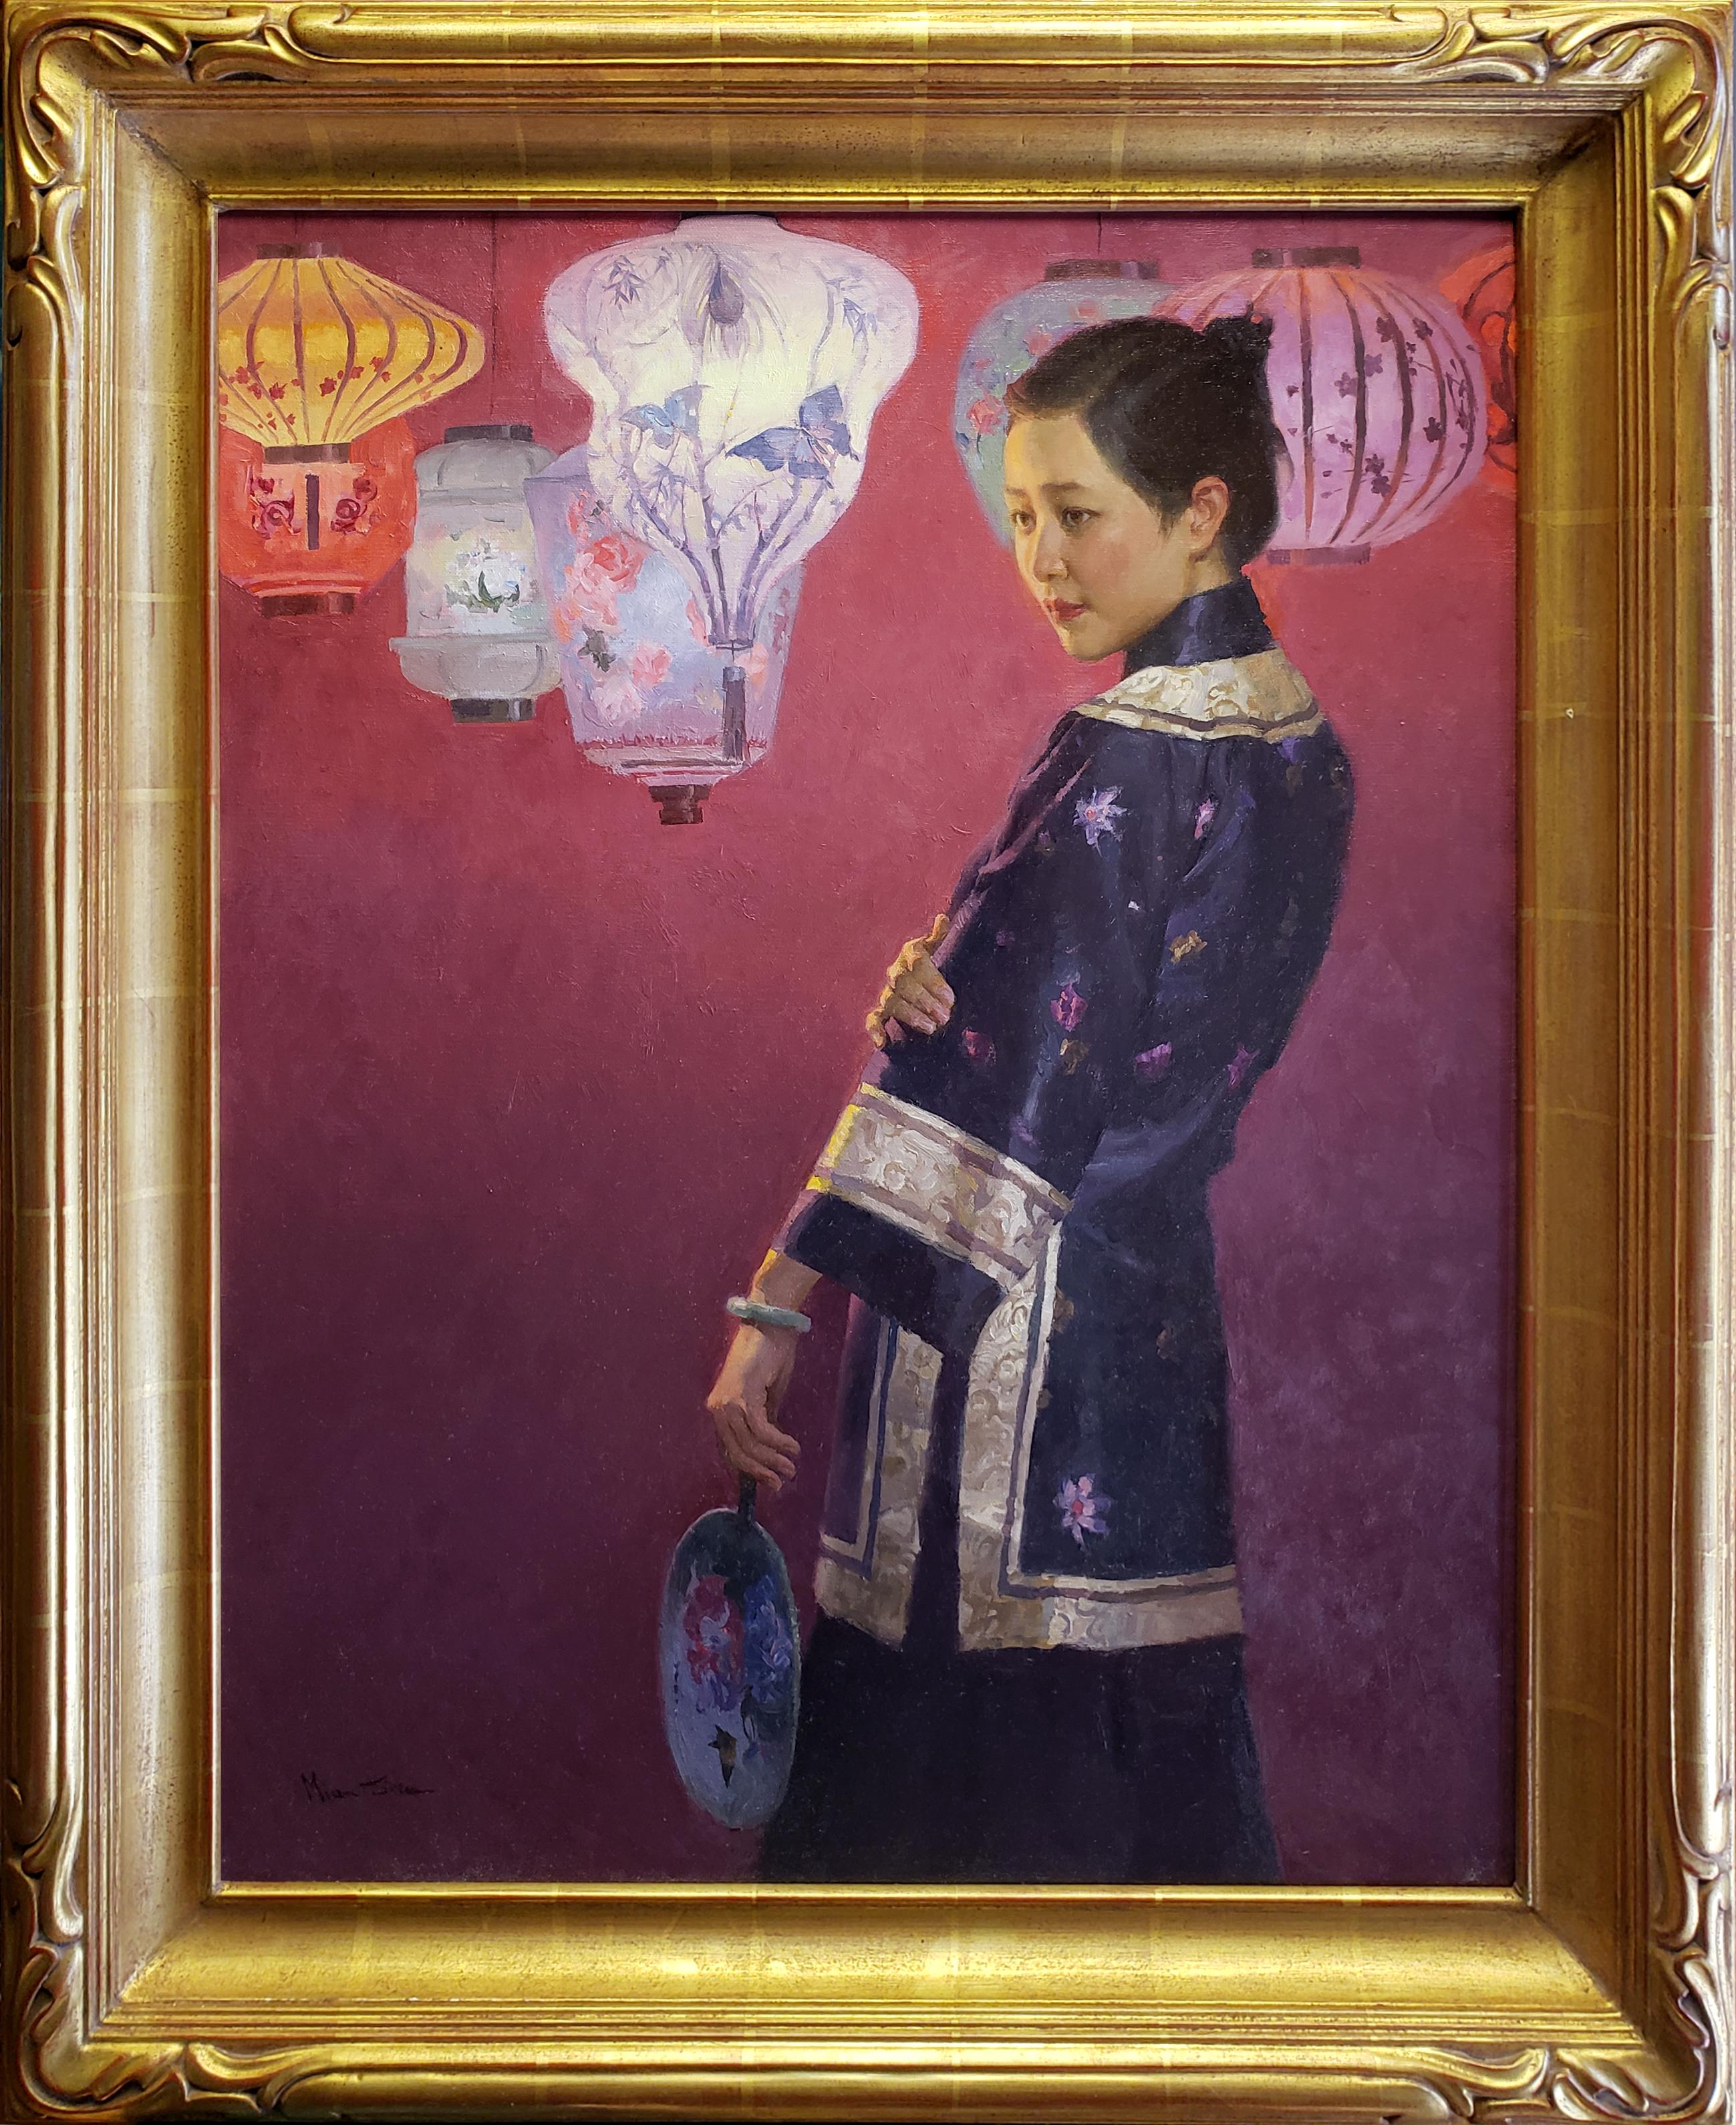 Lantern Festival - Painting by Mian Situ